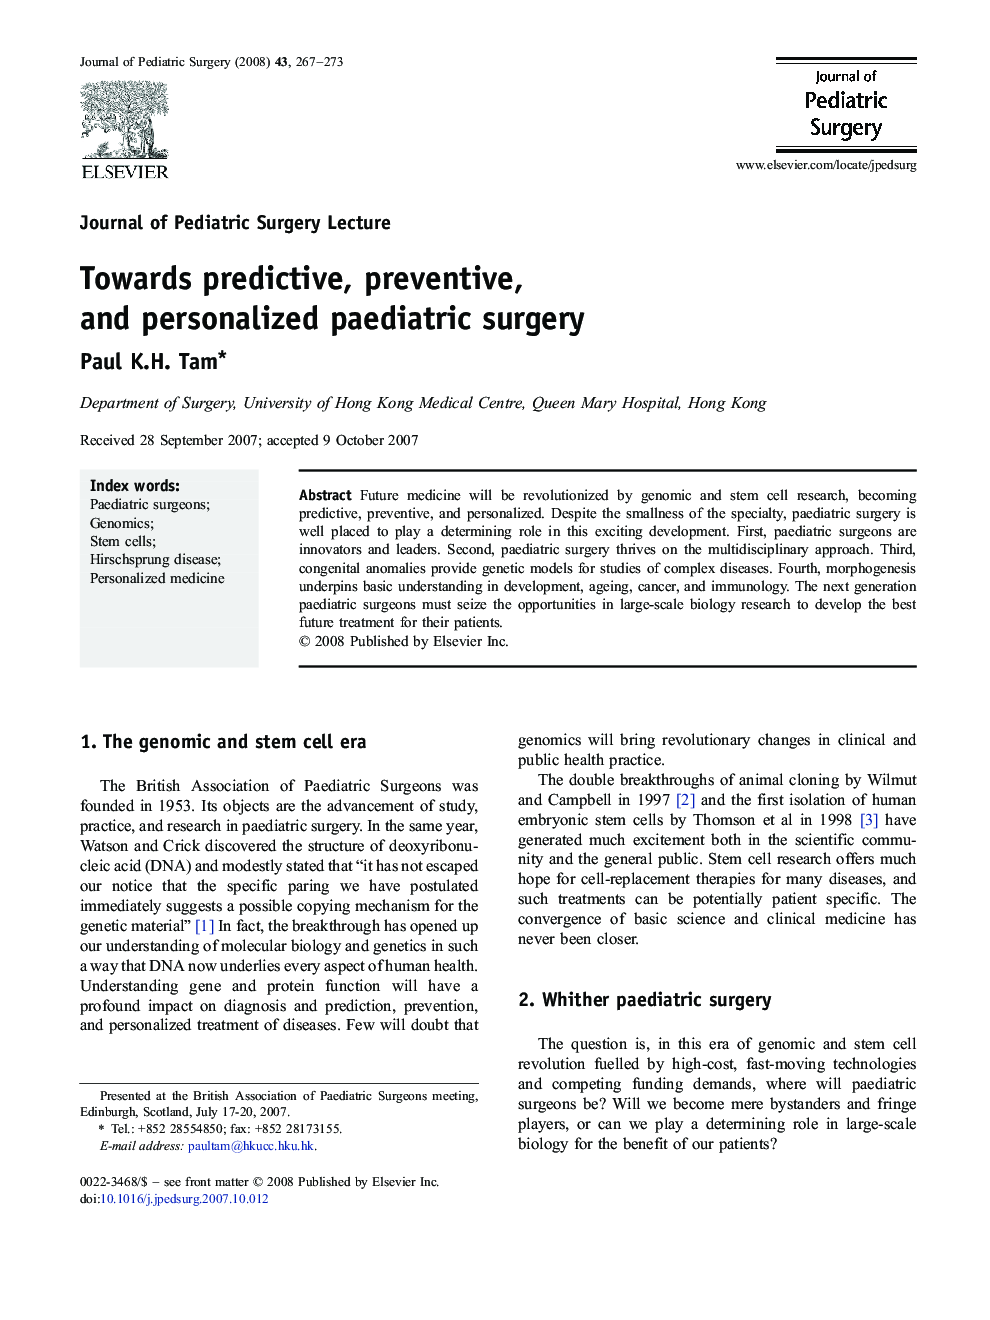 Towards predictive, preventive, and personalized paediatric surgery 